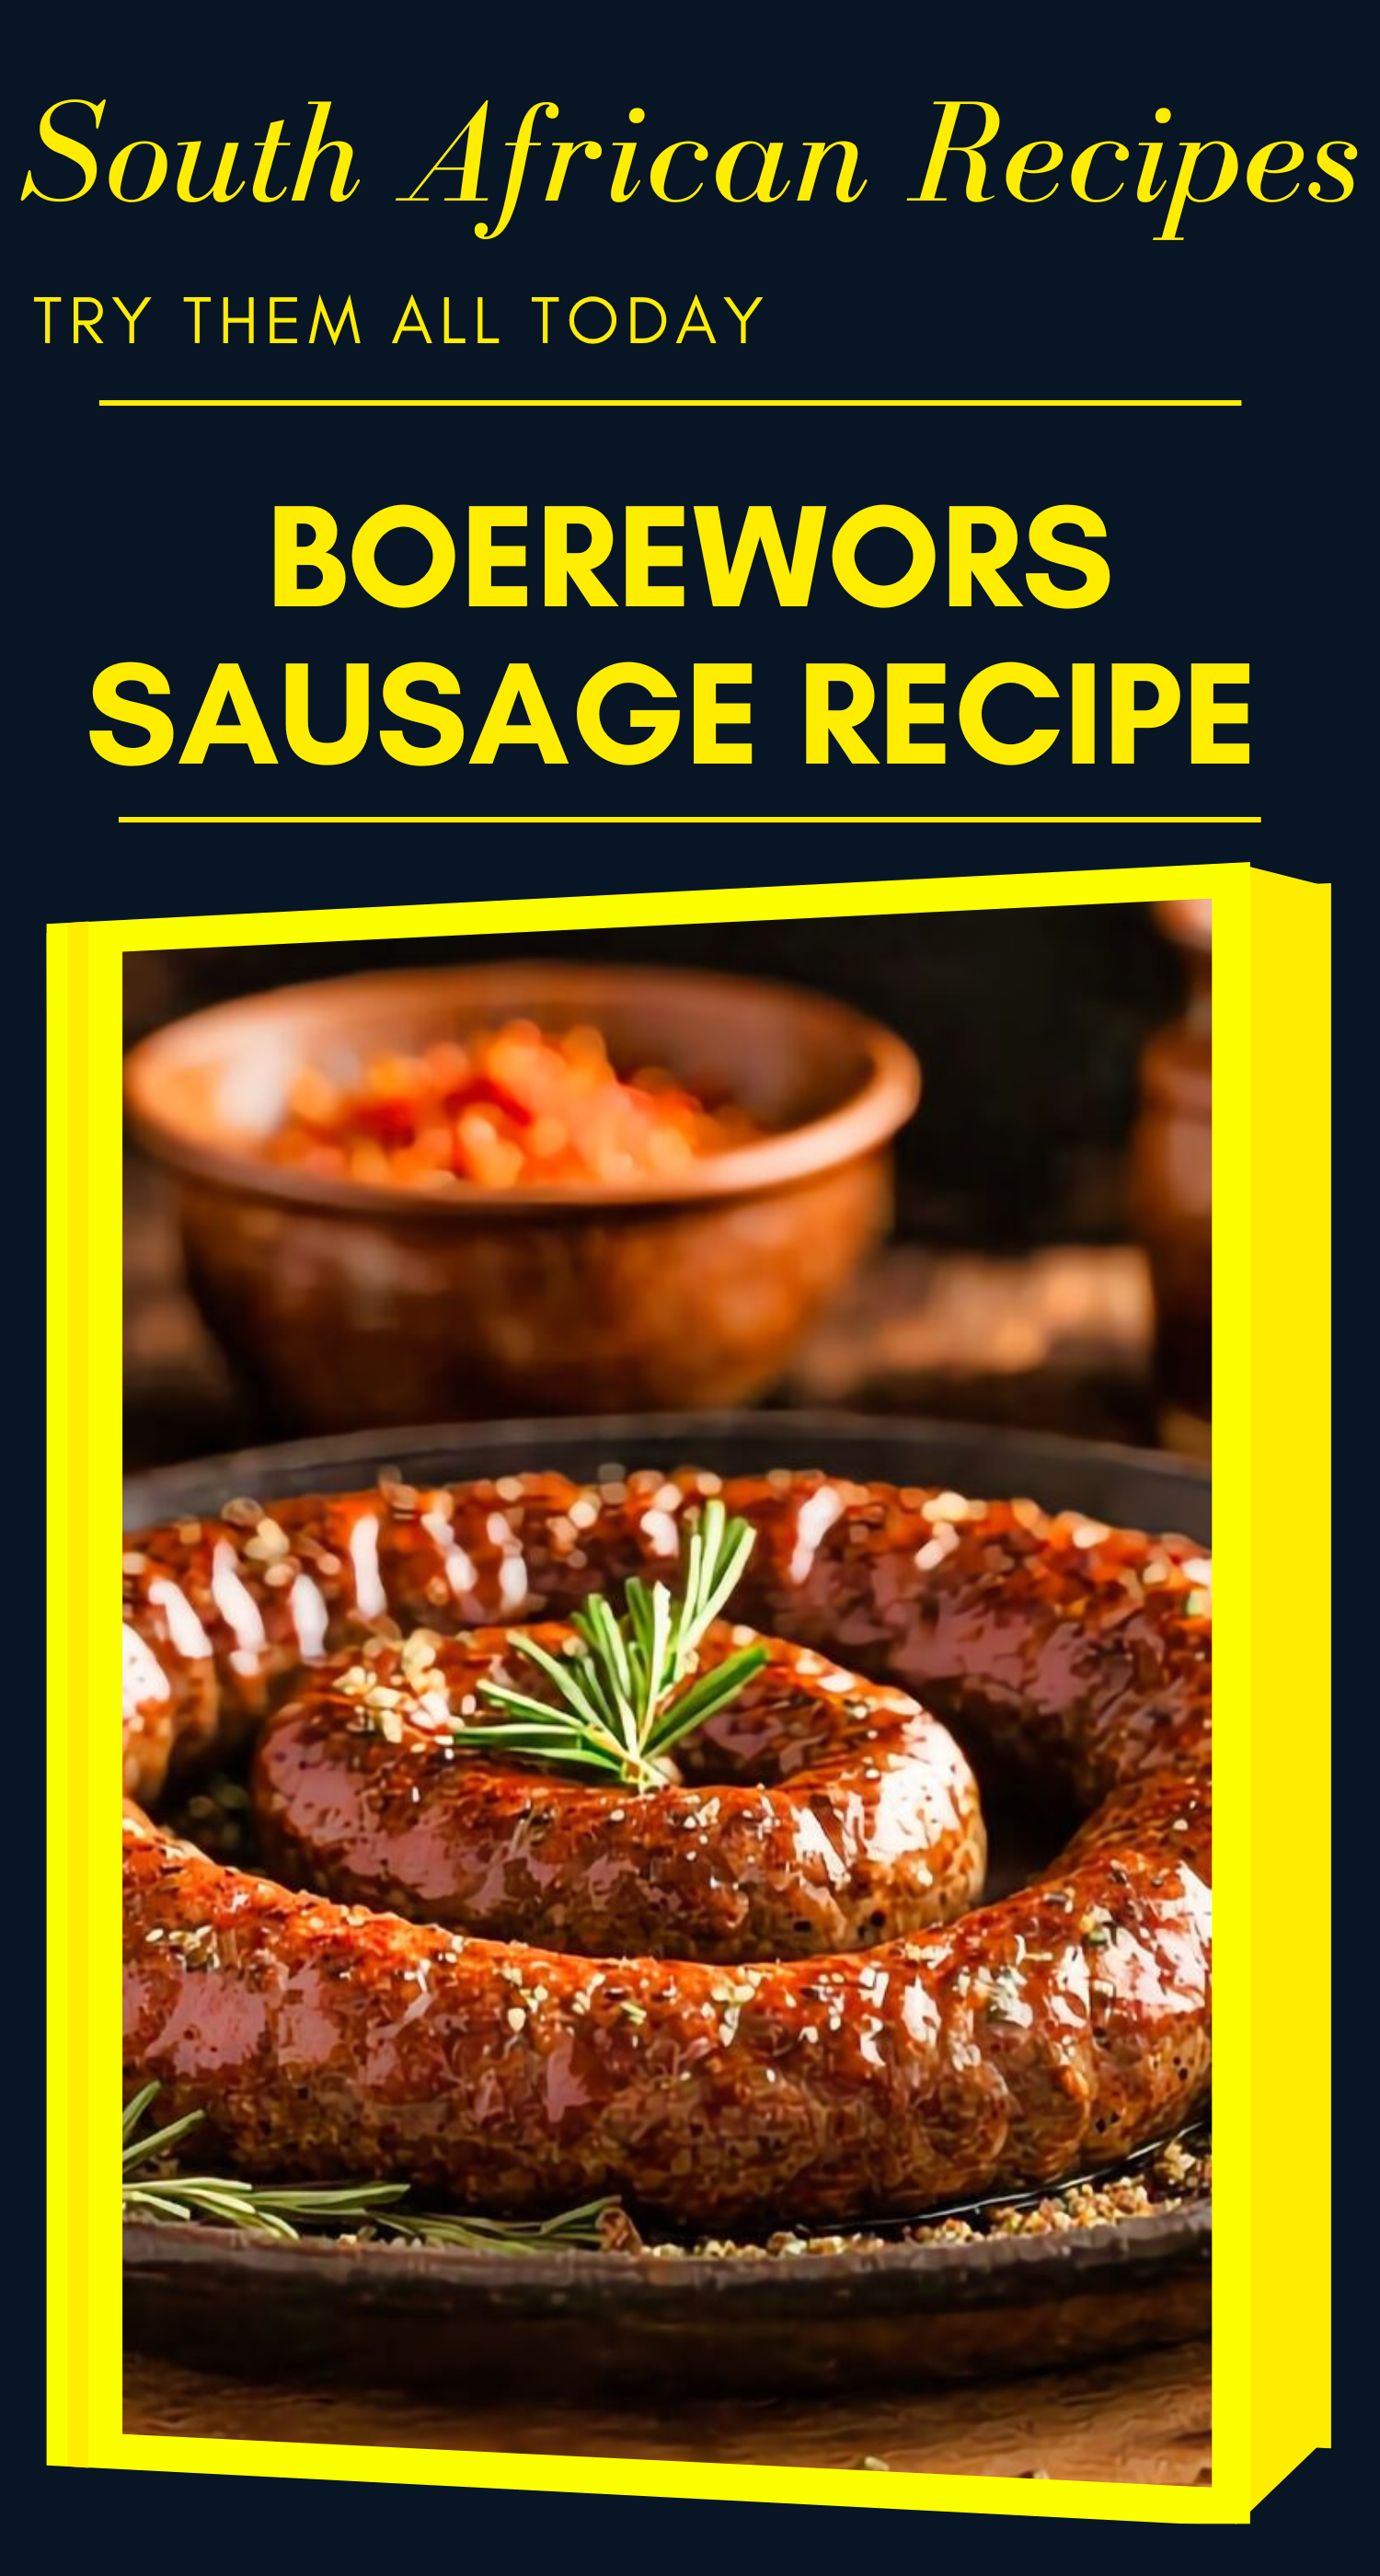 South African Boerewors Sausage Recipe